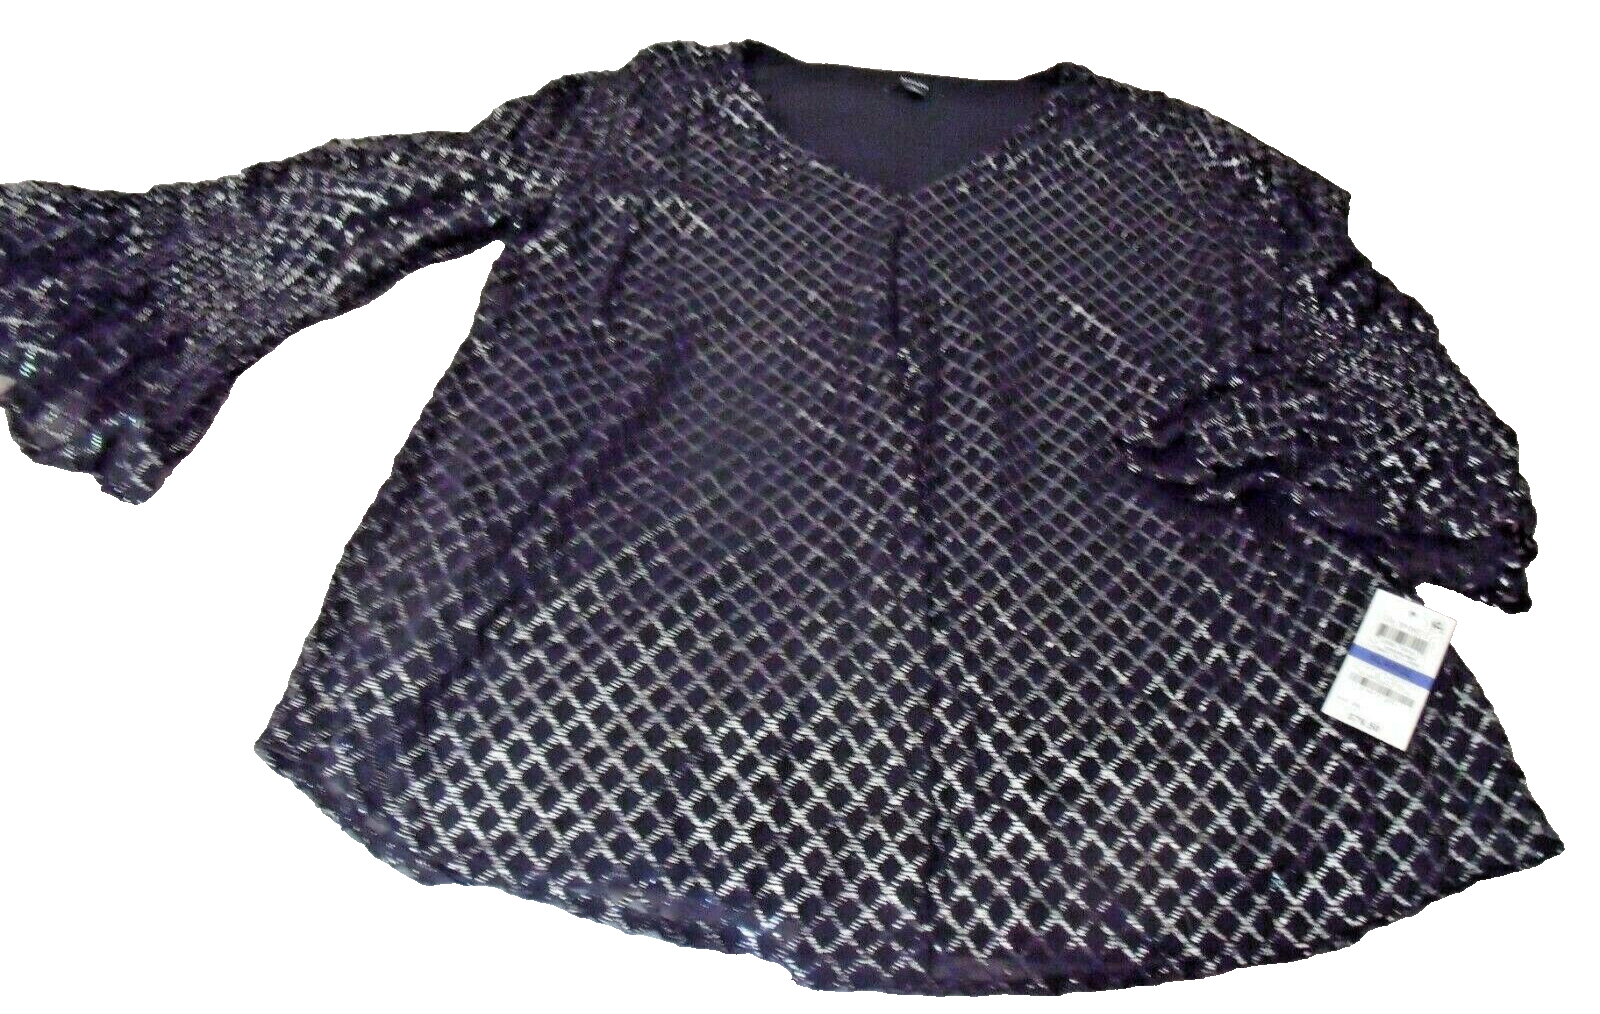 Primary image for NEW Womens XL ALFANI Black Metallic TOP V Neck 3/4 Sleeves $79.50 Retail 